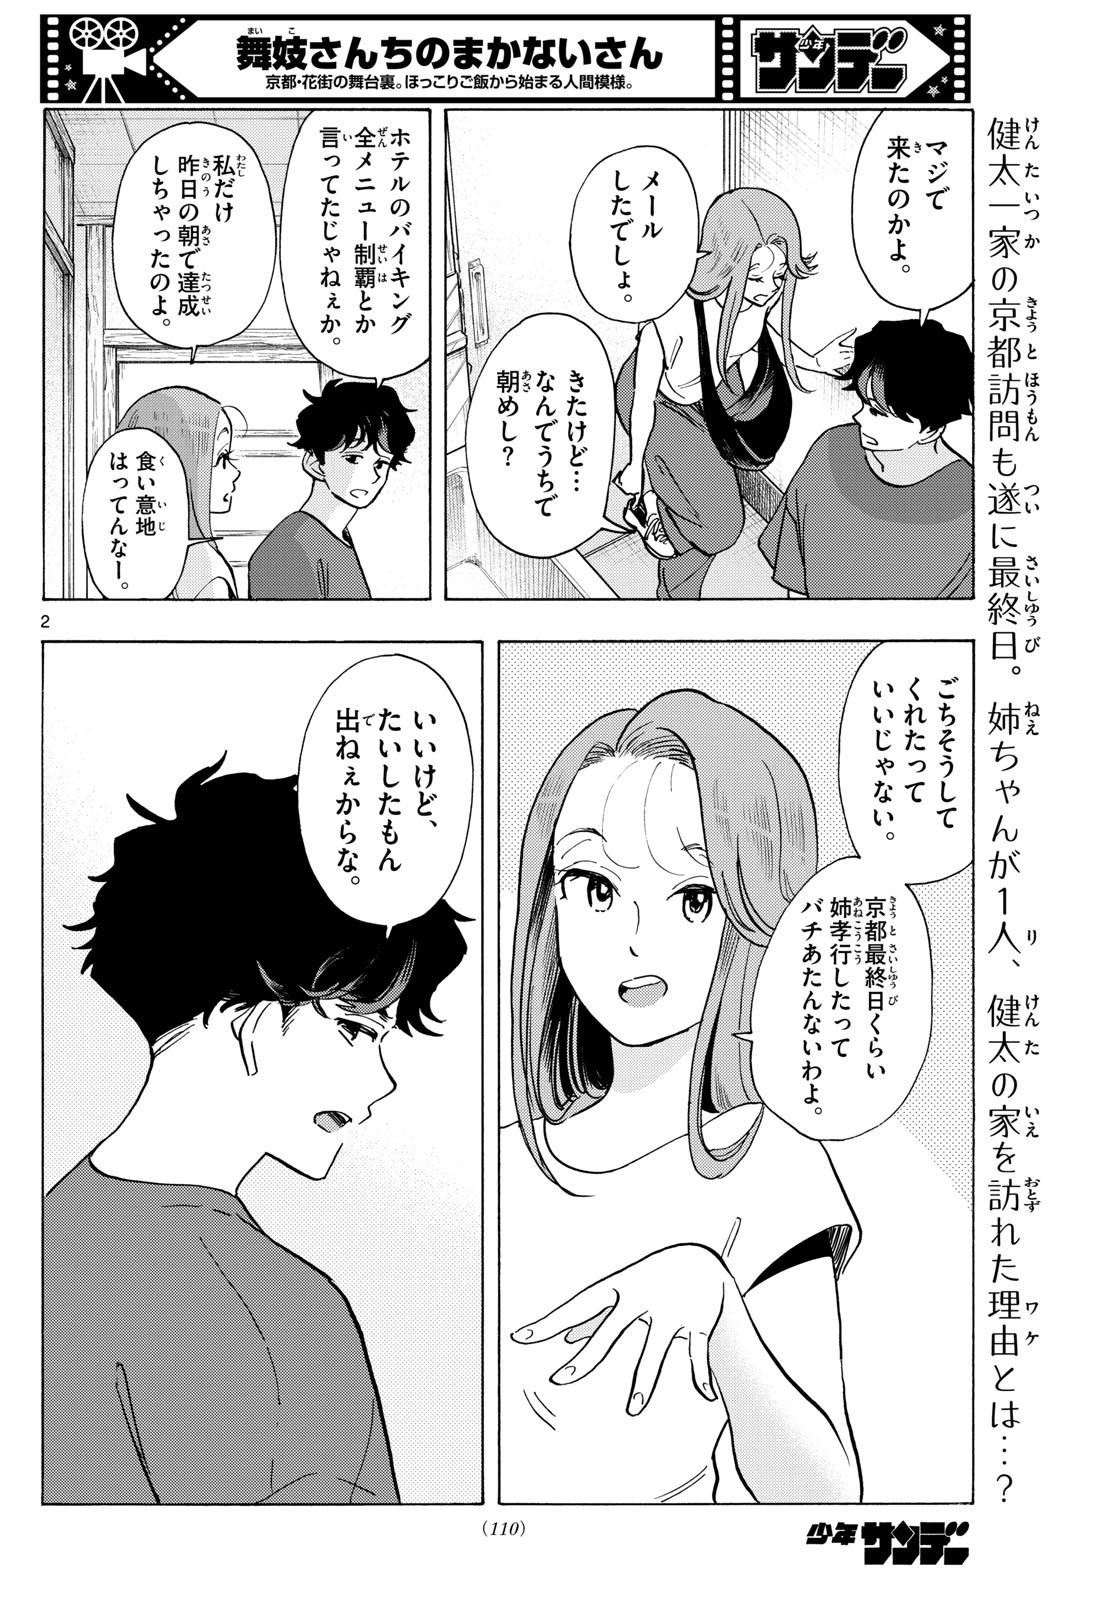 Maiko-san Chi no Makanai-san - Chapter 306 - Page 2